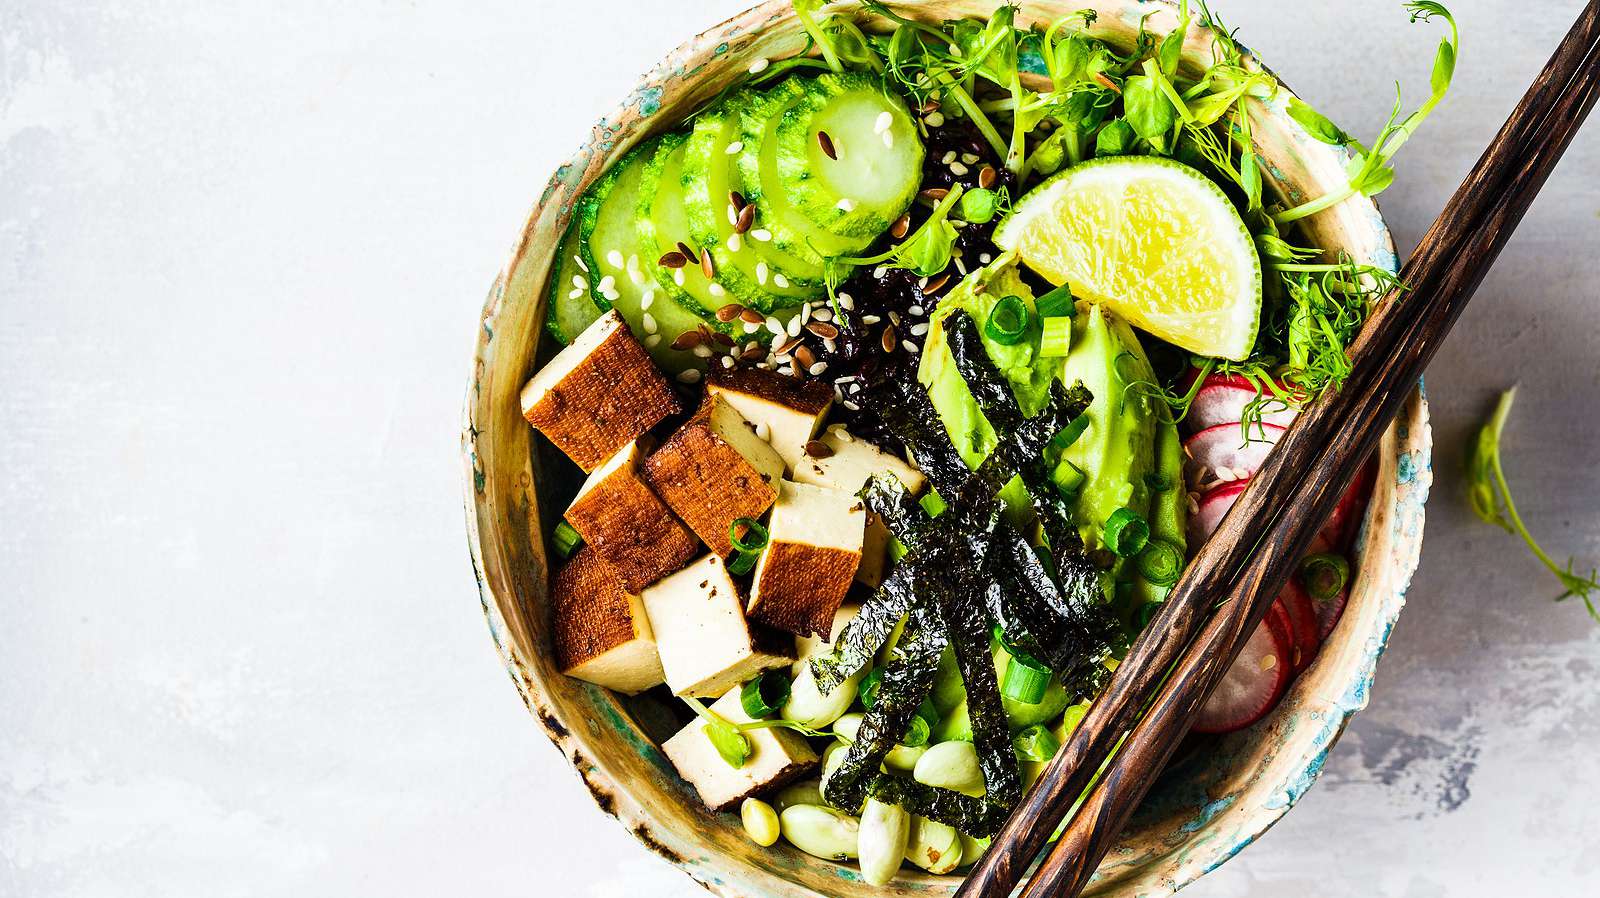 Sushi Salad With Tofu and Brown Rice